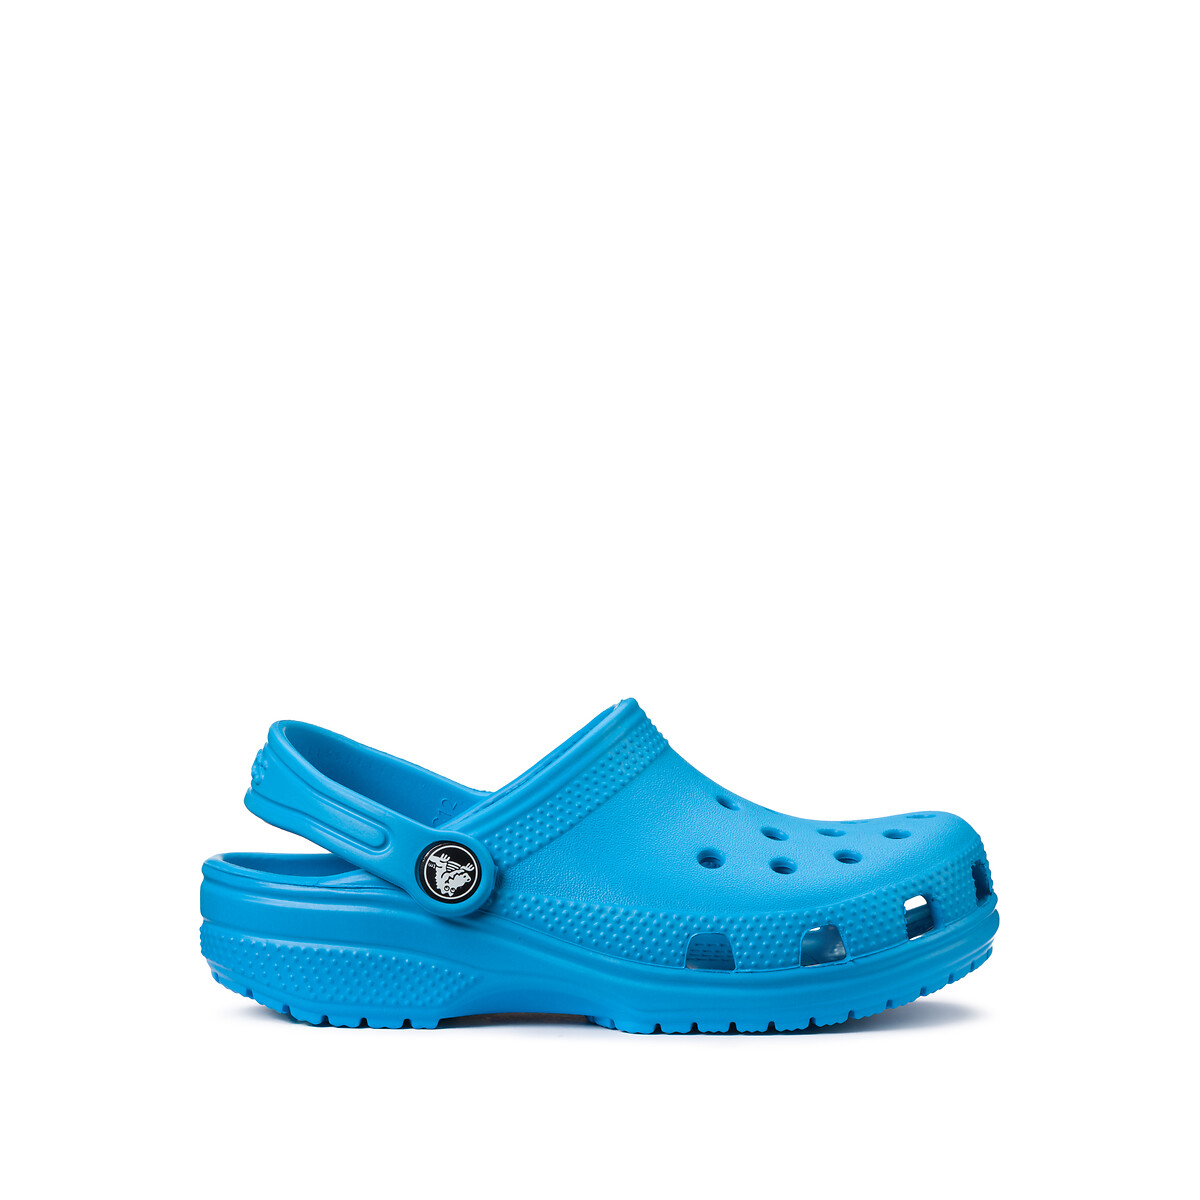 børnetræsko blå Crocs | La Redoute